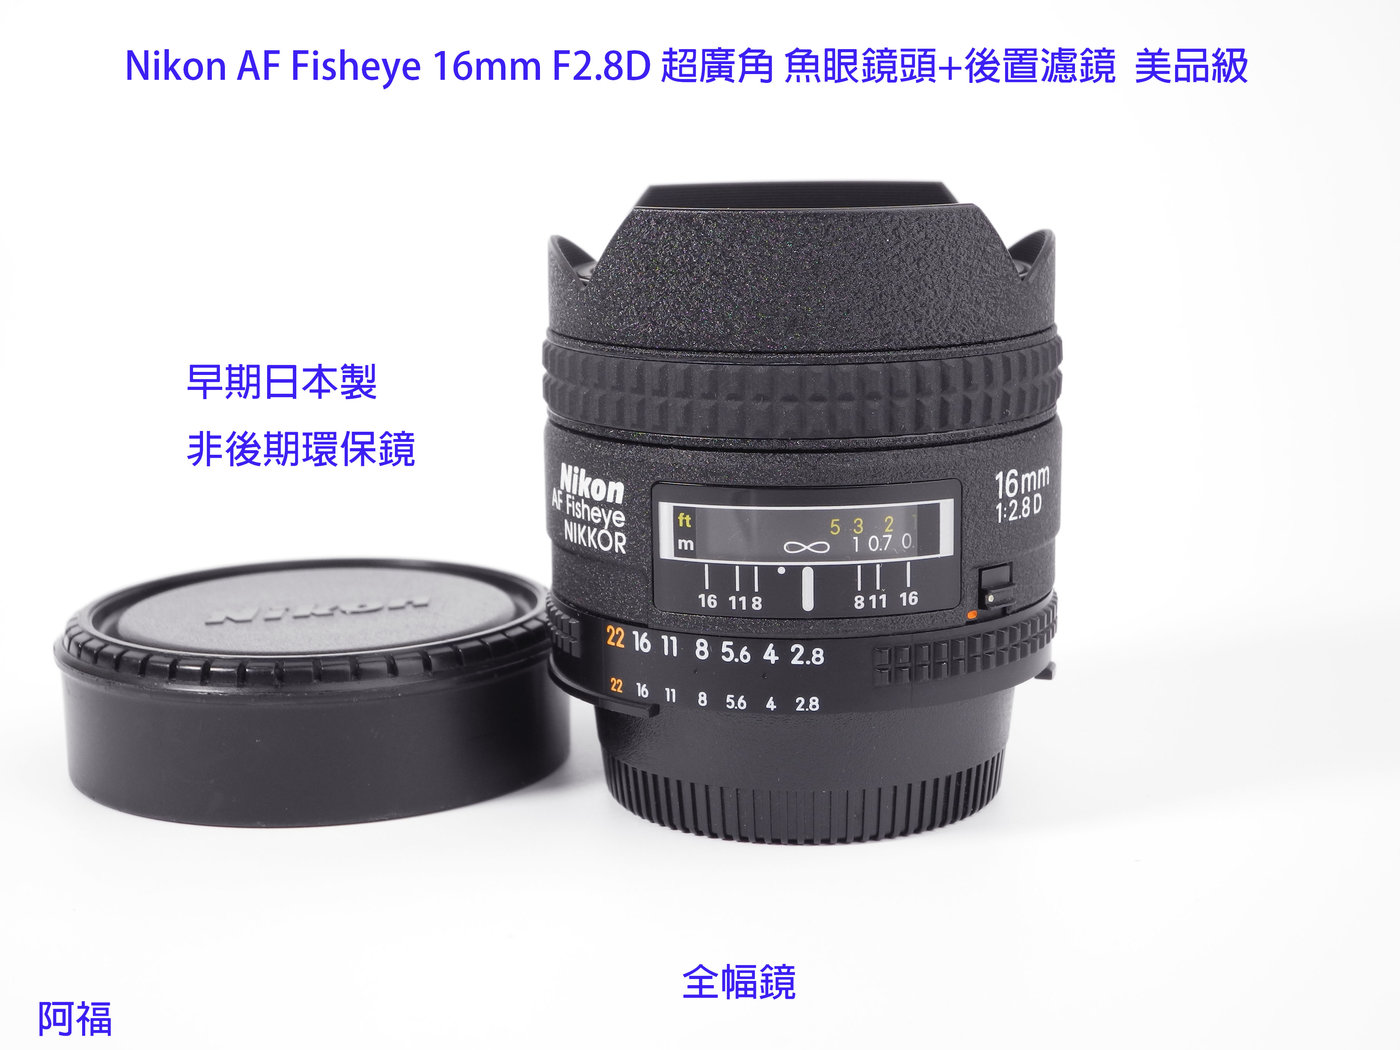 Nikon AF Fisheye 16mm F2.8D 超廣角魚眼鏡頭+後置濾鏡美品級全幅鏡頭 